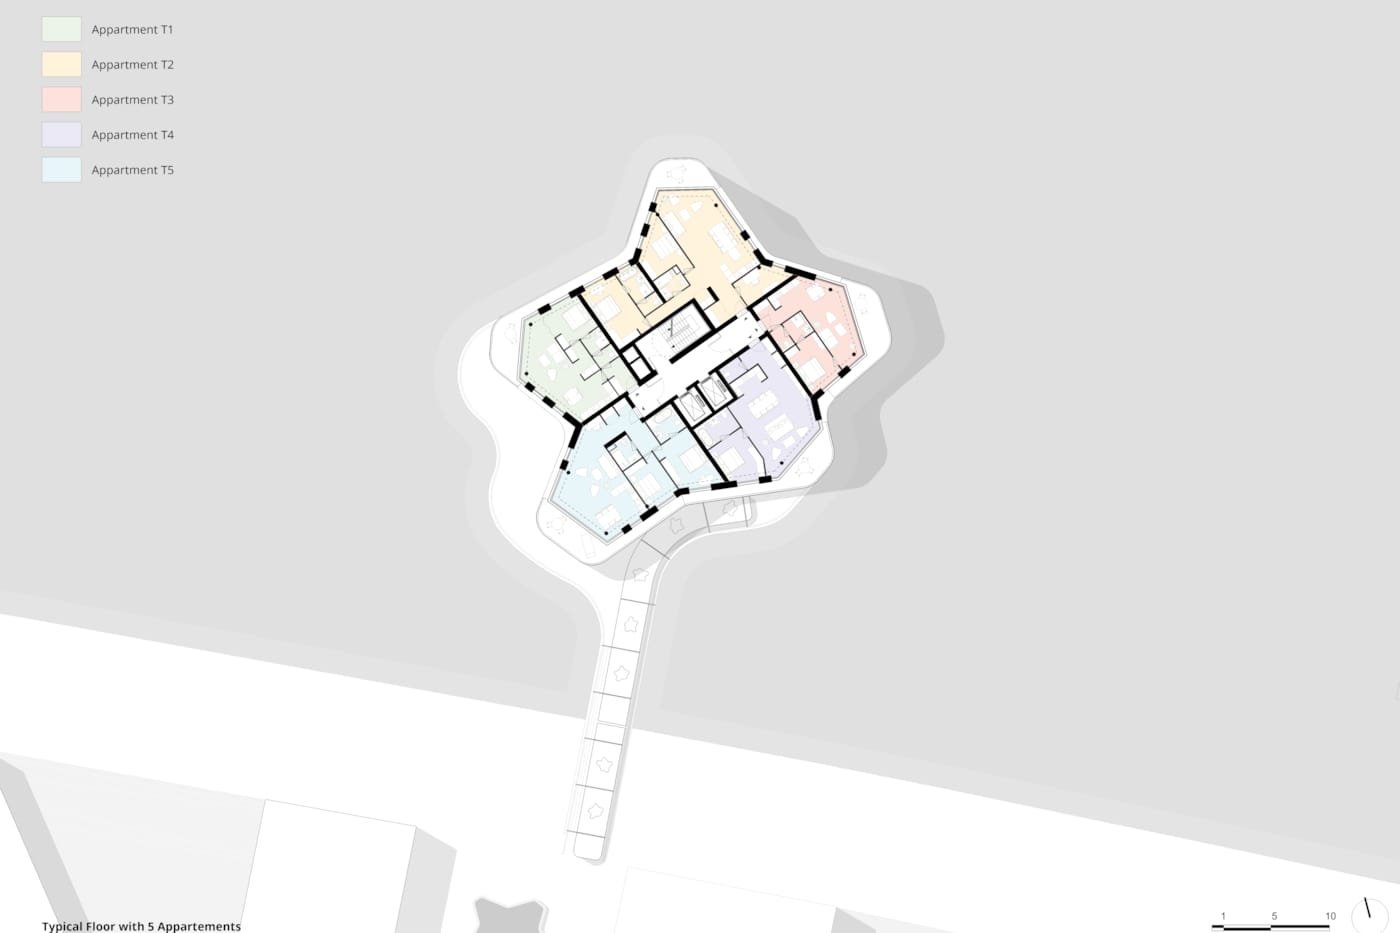 //www.kcap.eu/media/uploads/21031_Wohnturm Elbbrucken_KCAP with KH_(c)KCAP with KH_Wasserhäuser Plans with unit colors 02 typical floor.jpg